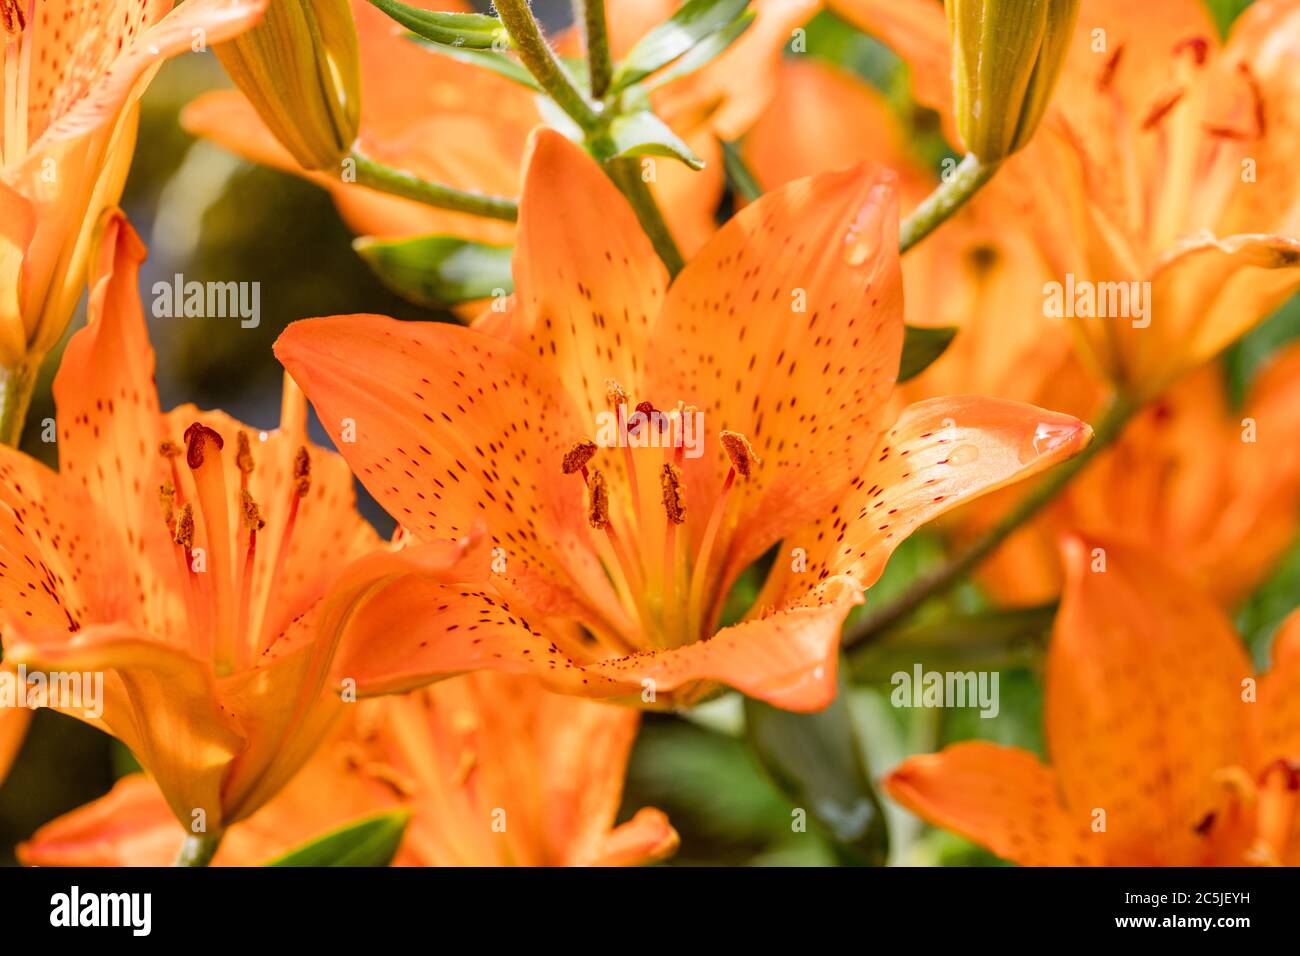 Orange Lily, Saffranslilja (Lilium bulbiferum var croceum) Stock Photo